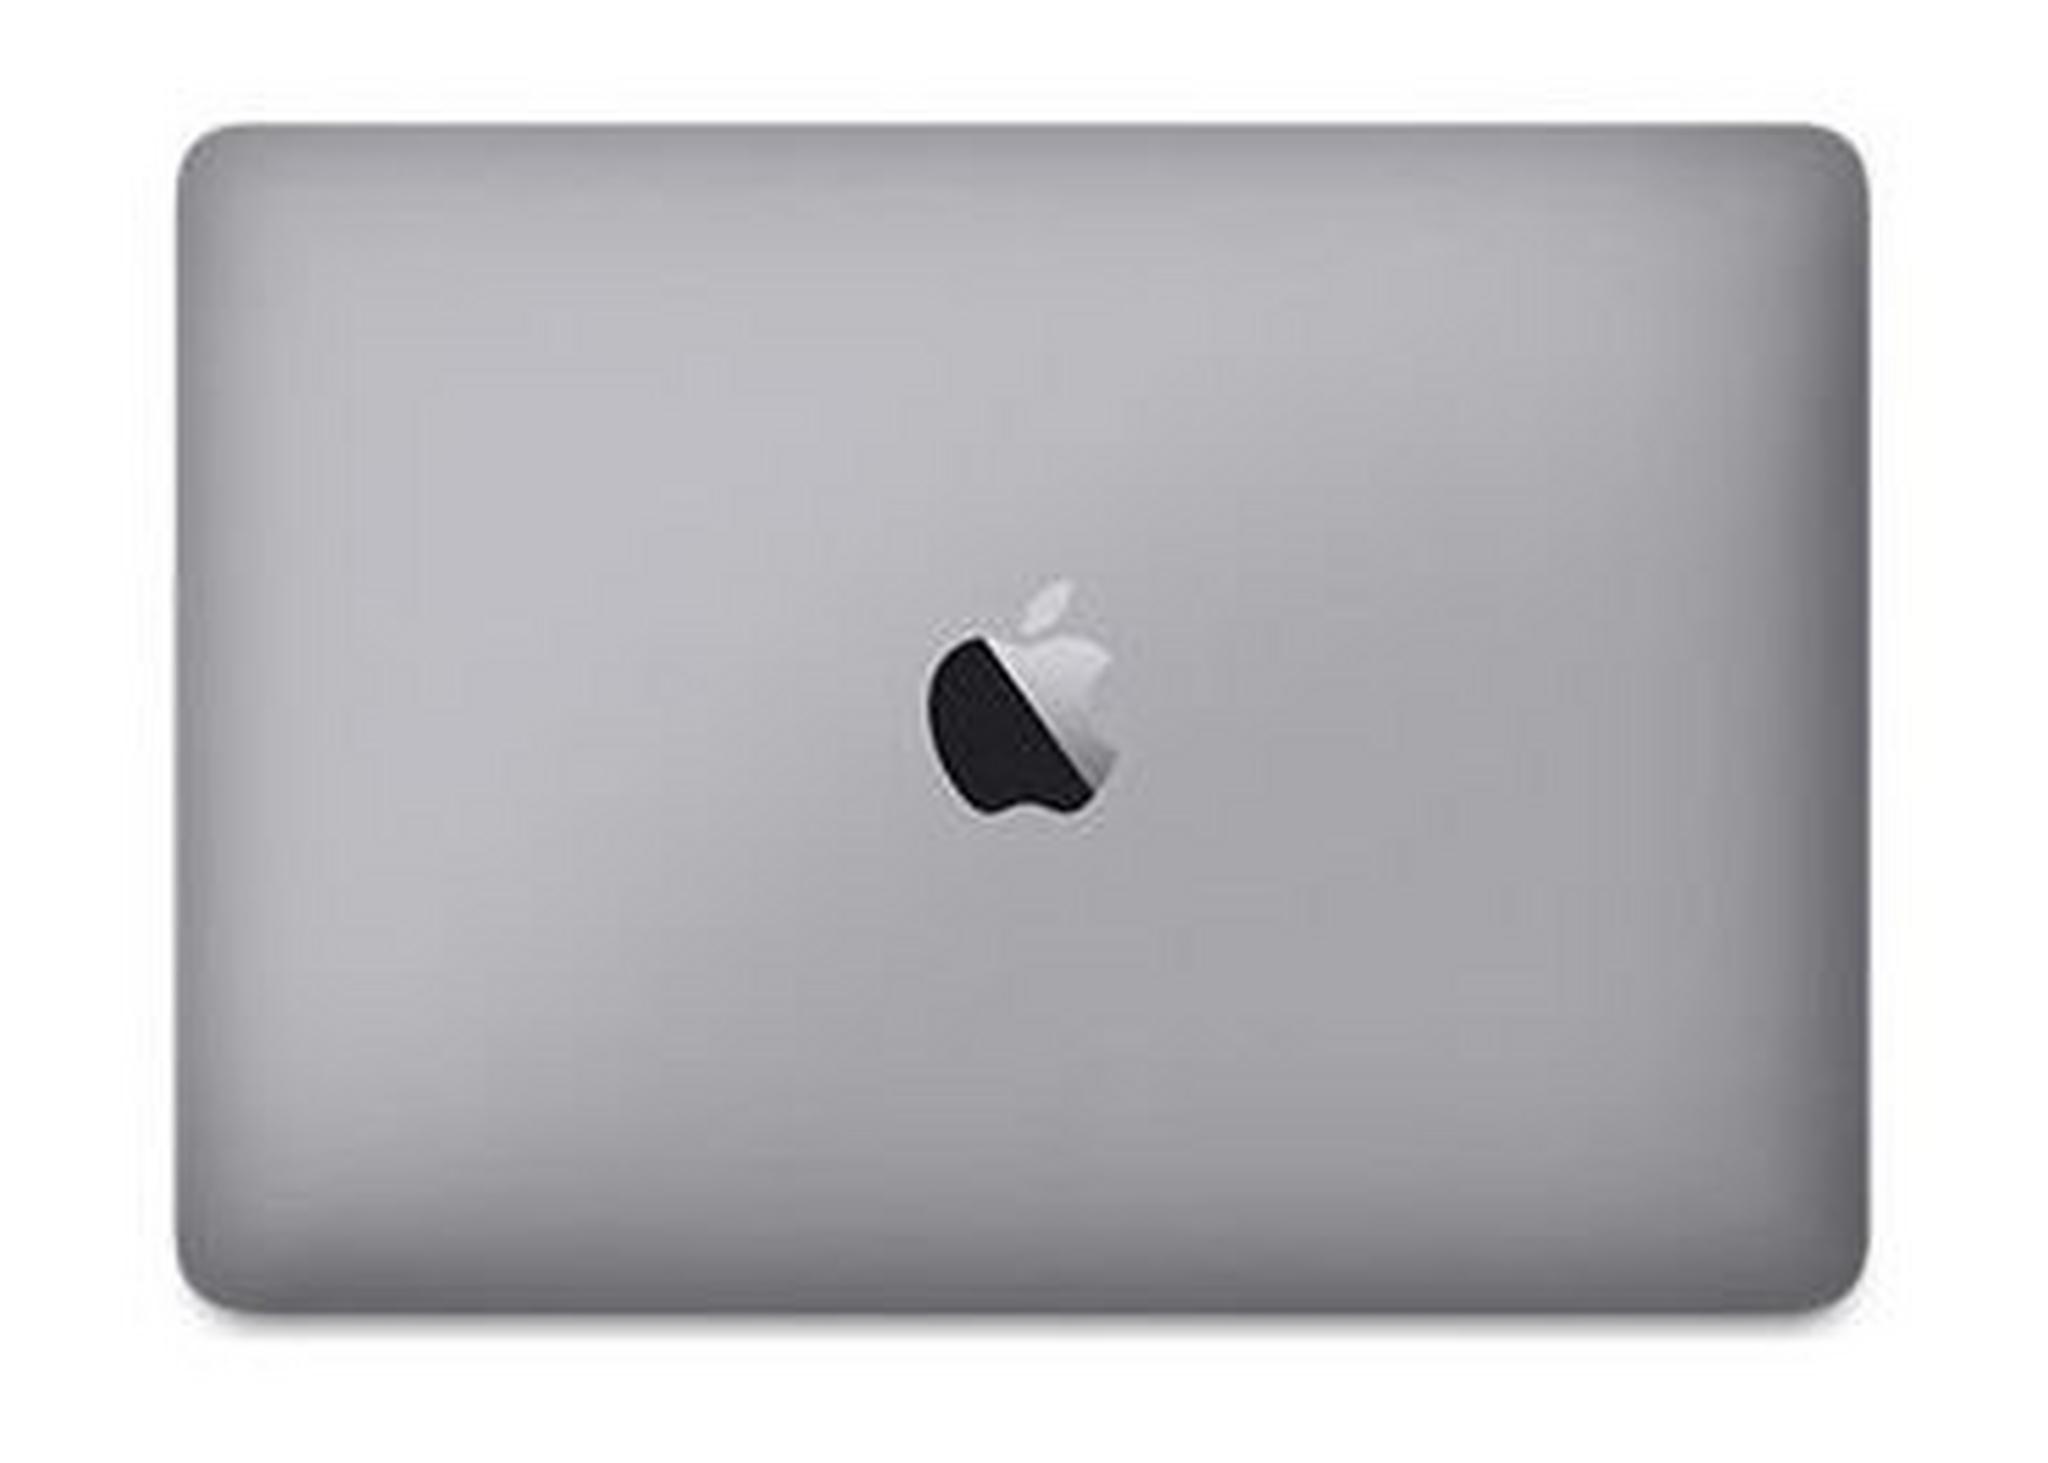 Apple MacBook Intel Core i5 8GB RAM 512 GB SSD 12-inch Laptop (MNYG2AE/A) - Space Grey